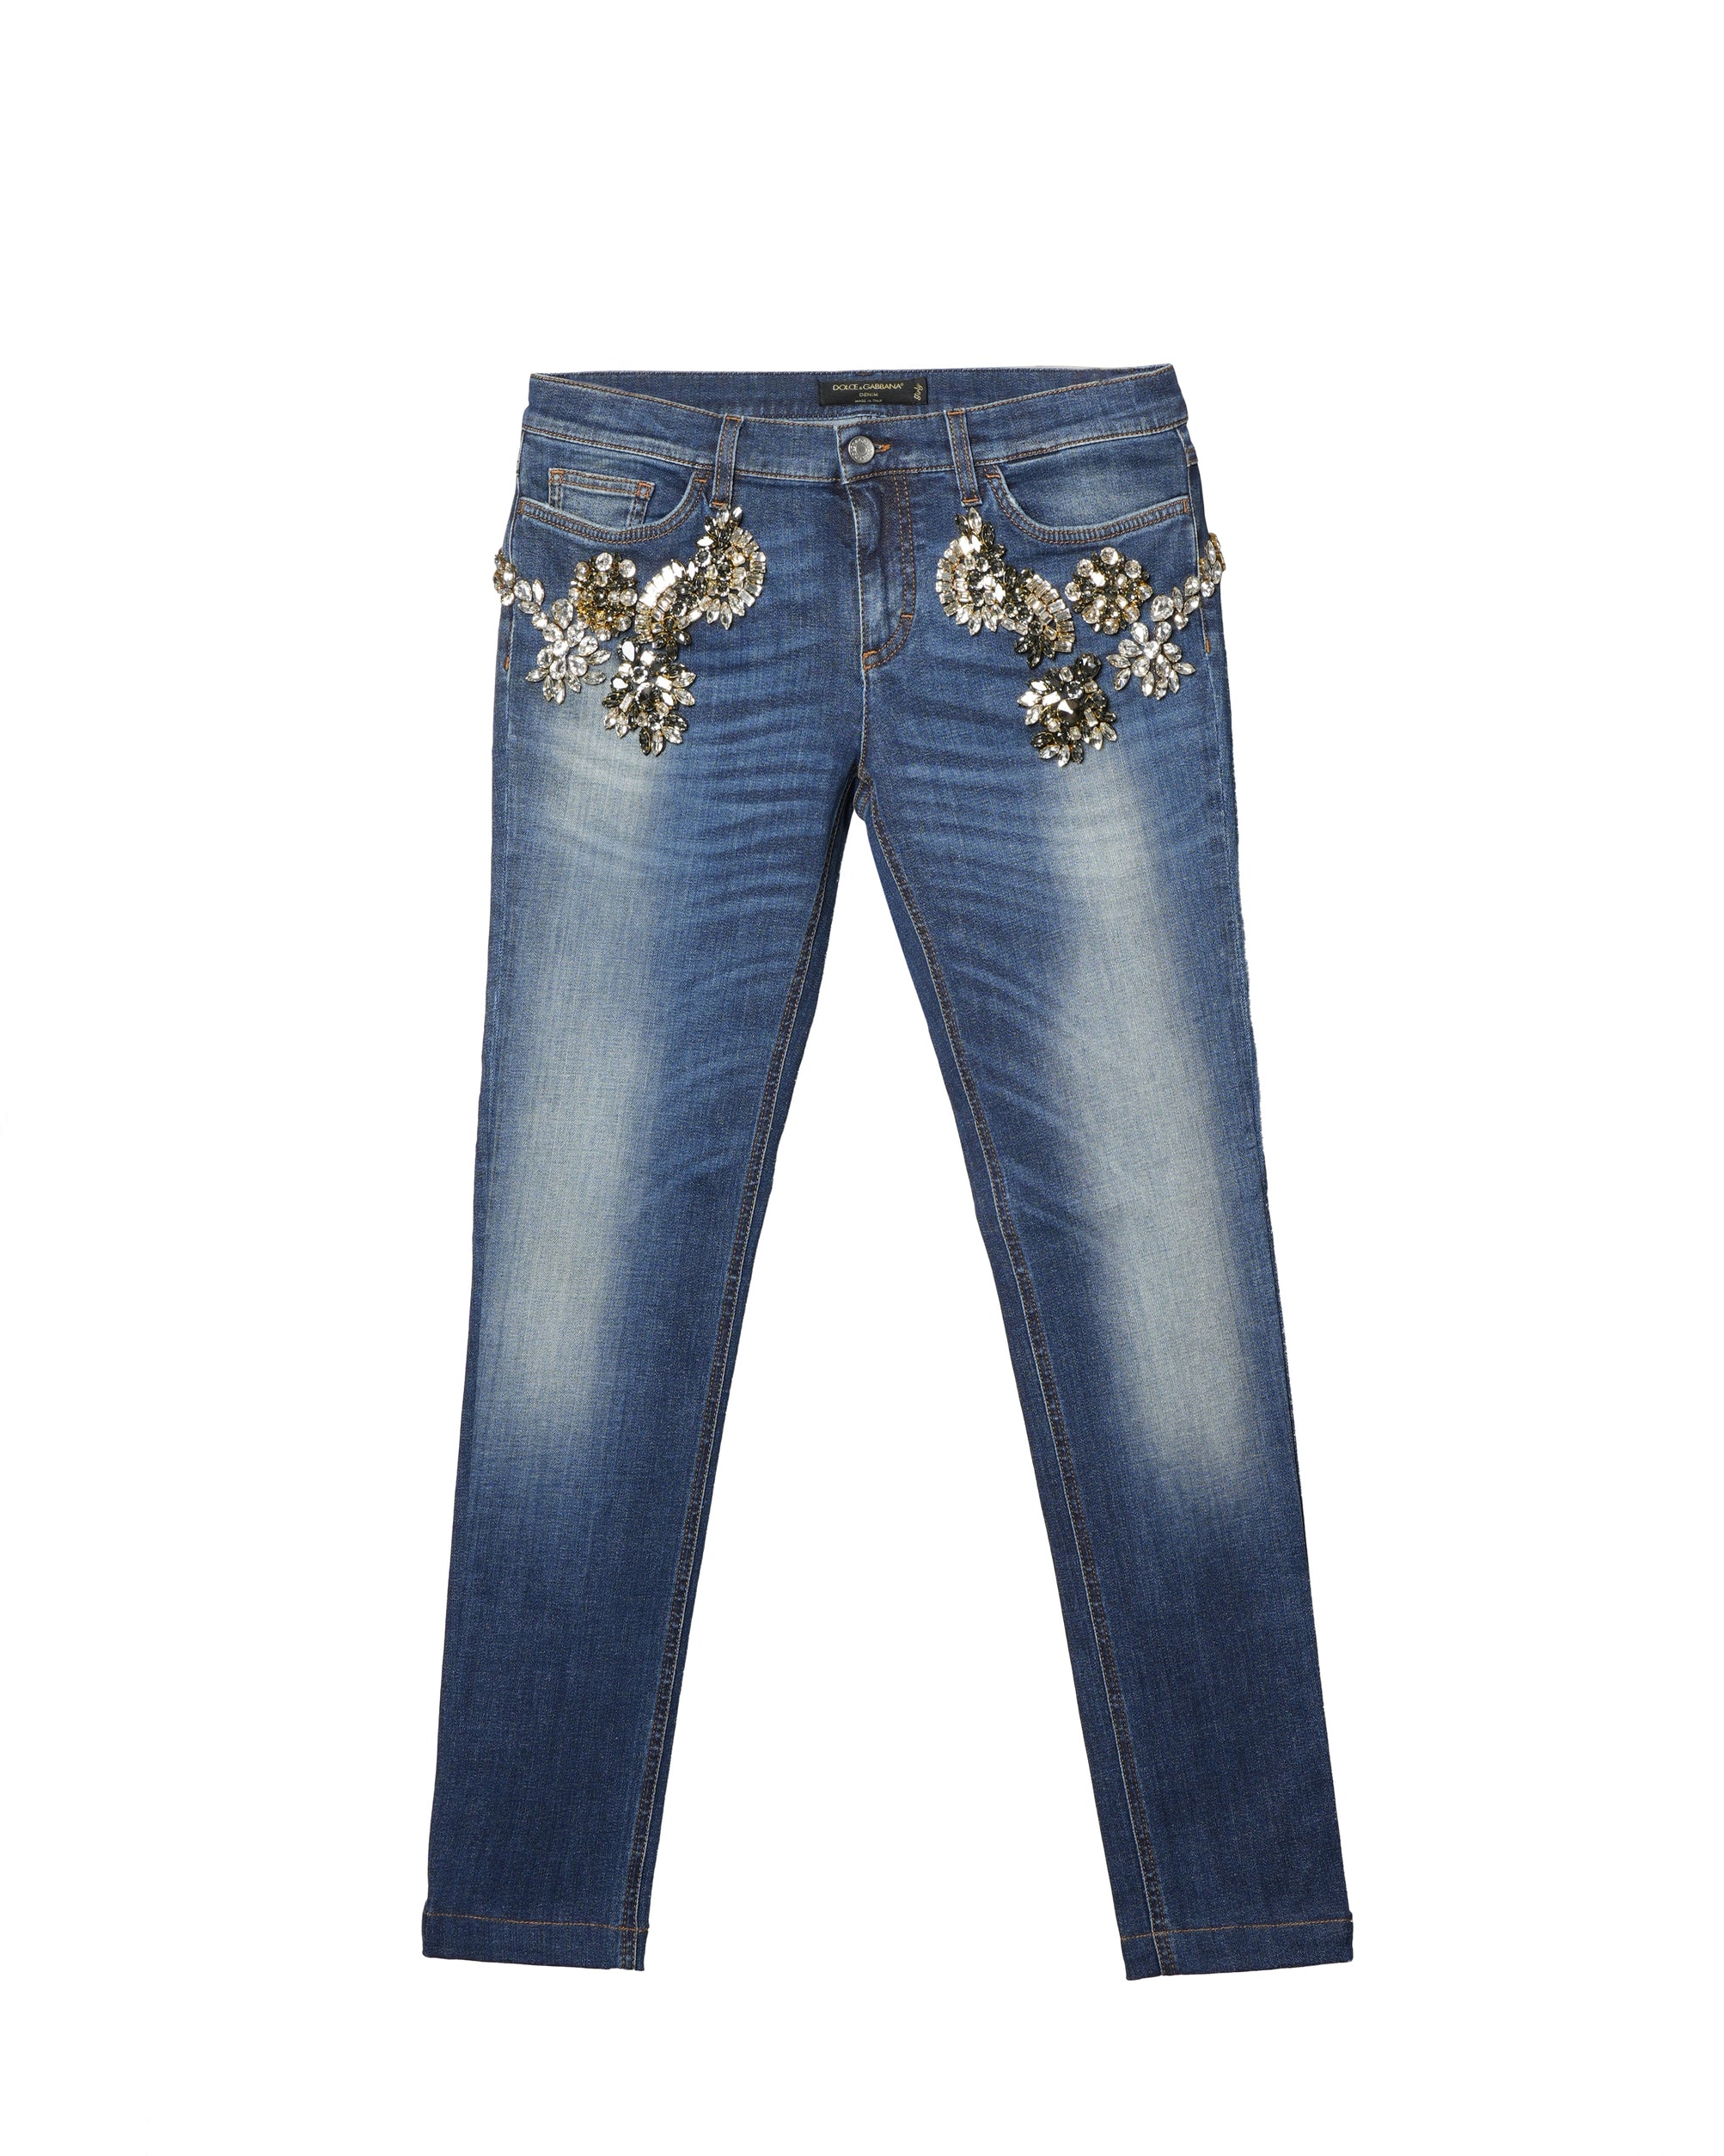 Dolce & Gabbana Bejeweled Jeans